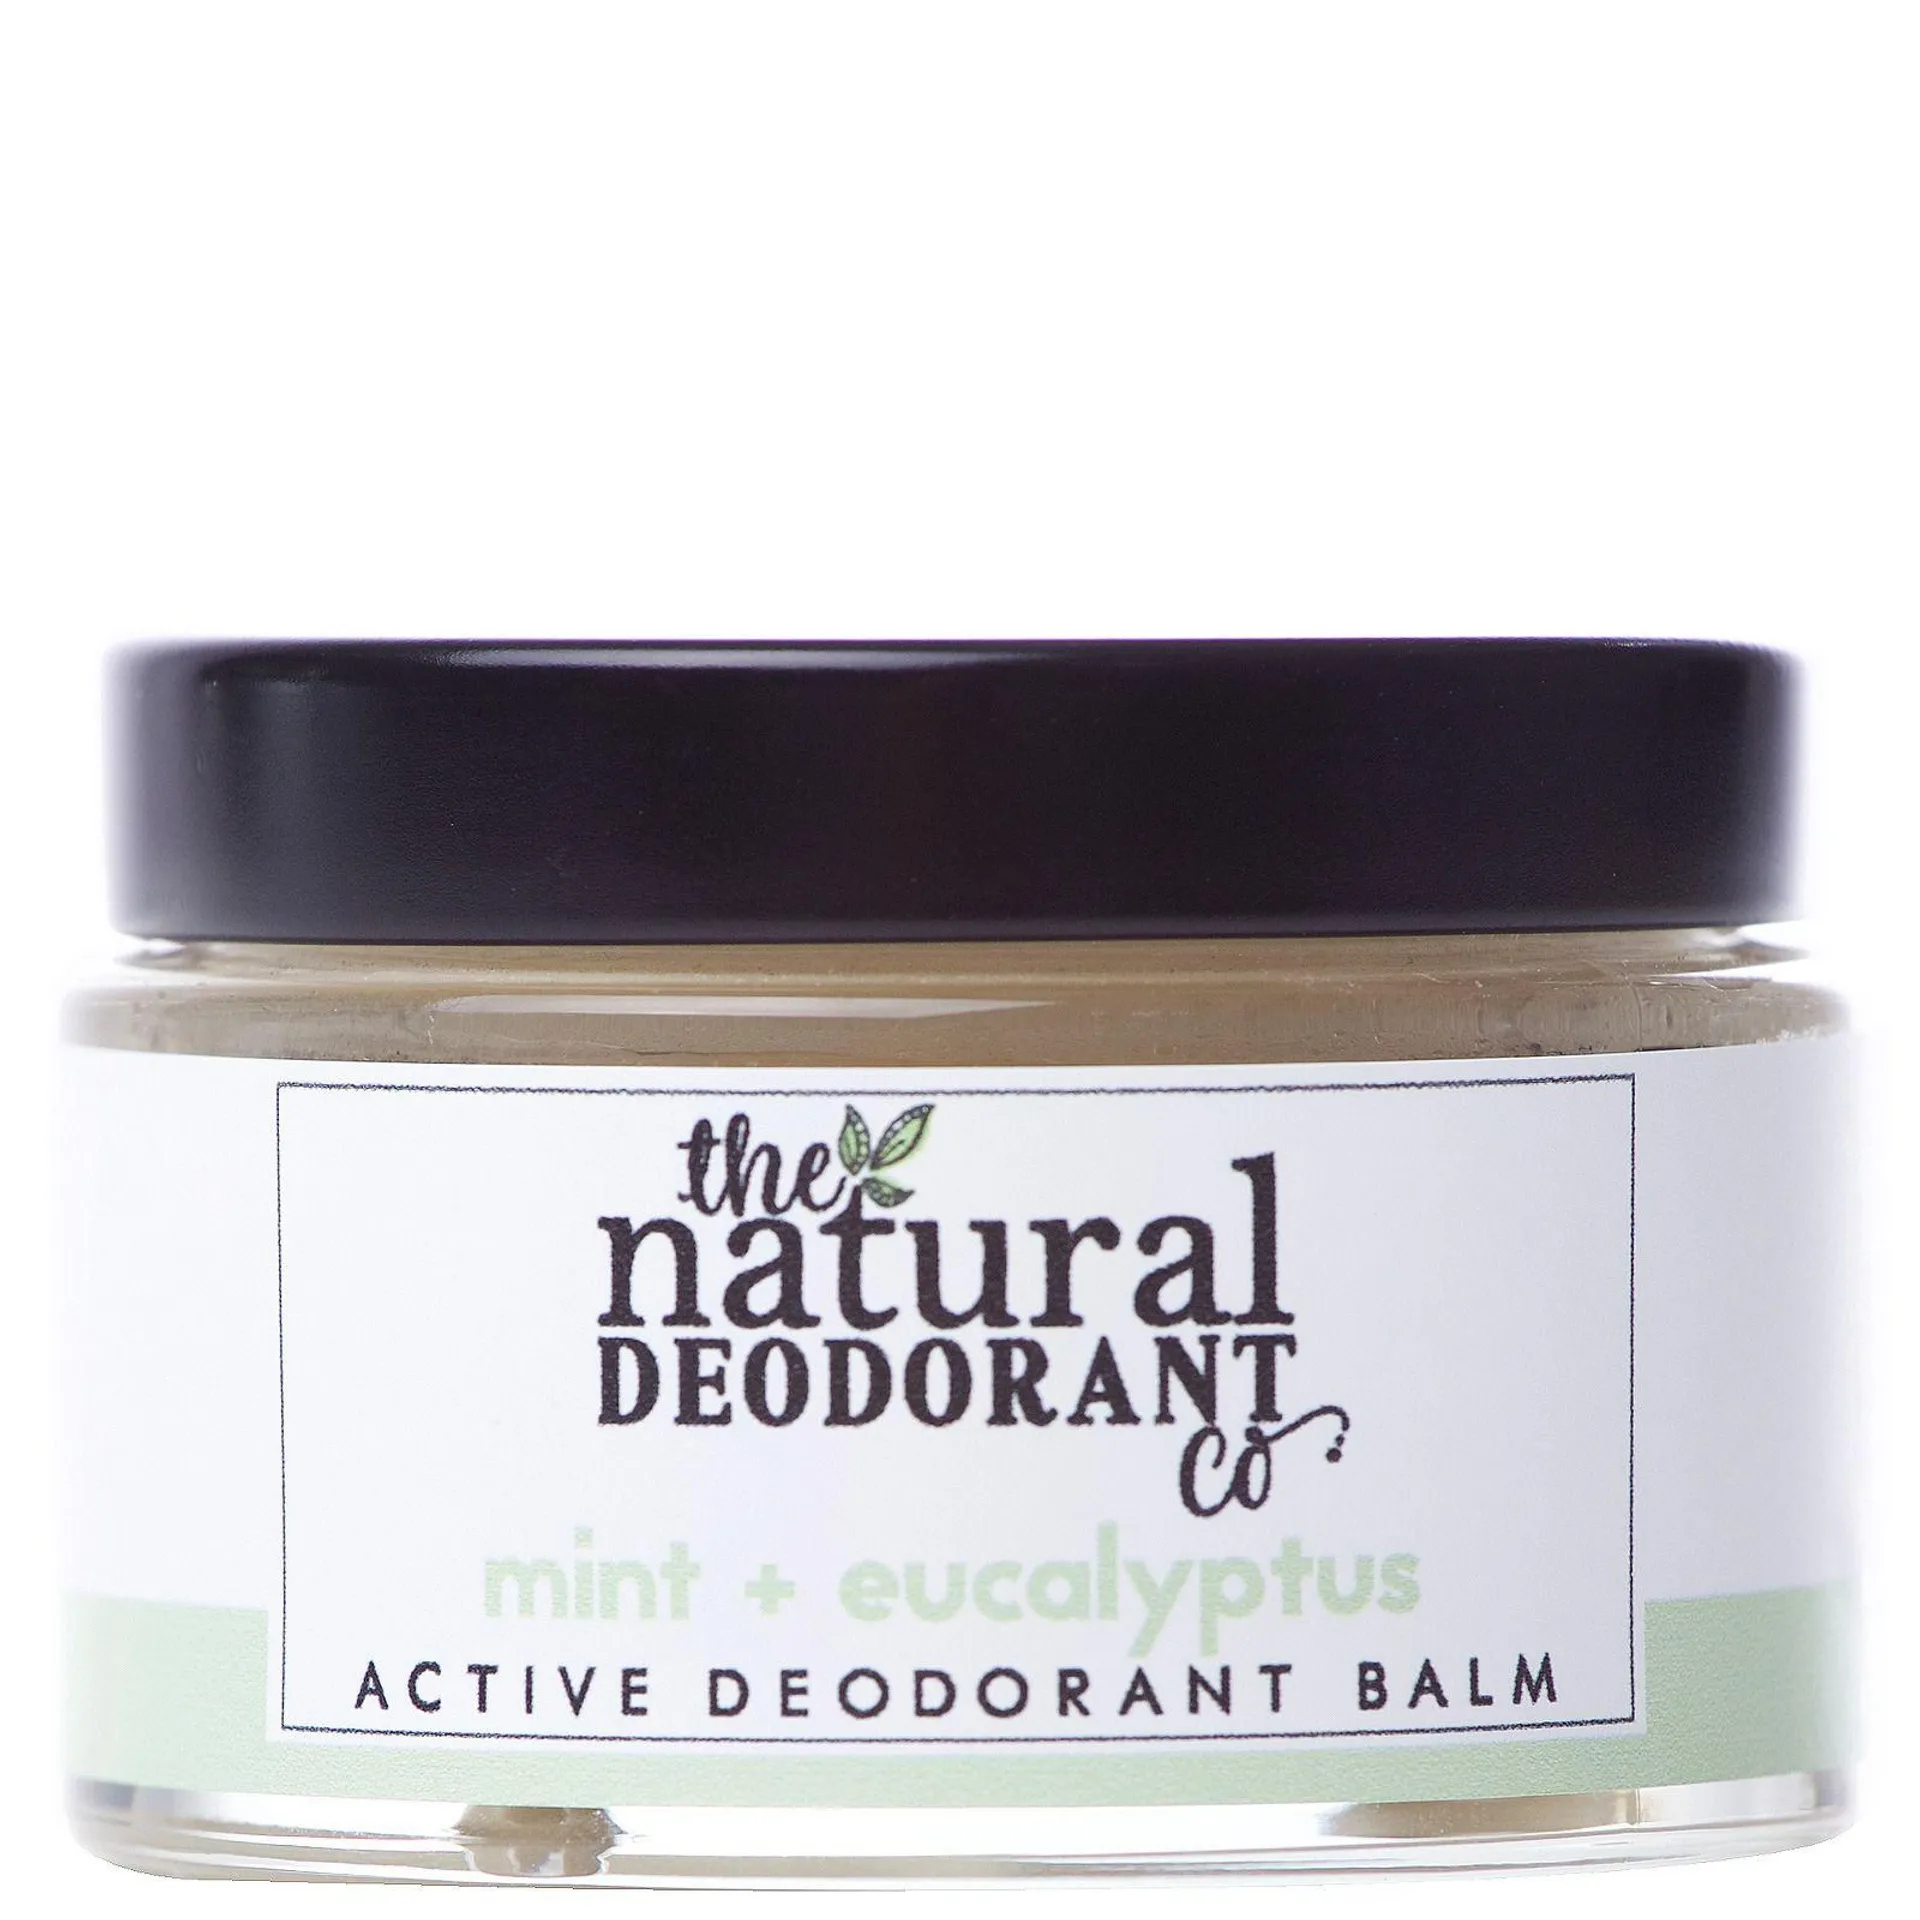 The Natural Deodorant Co. Active Deodorant Balm